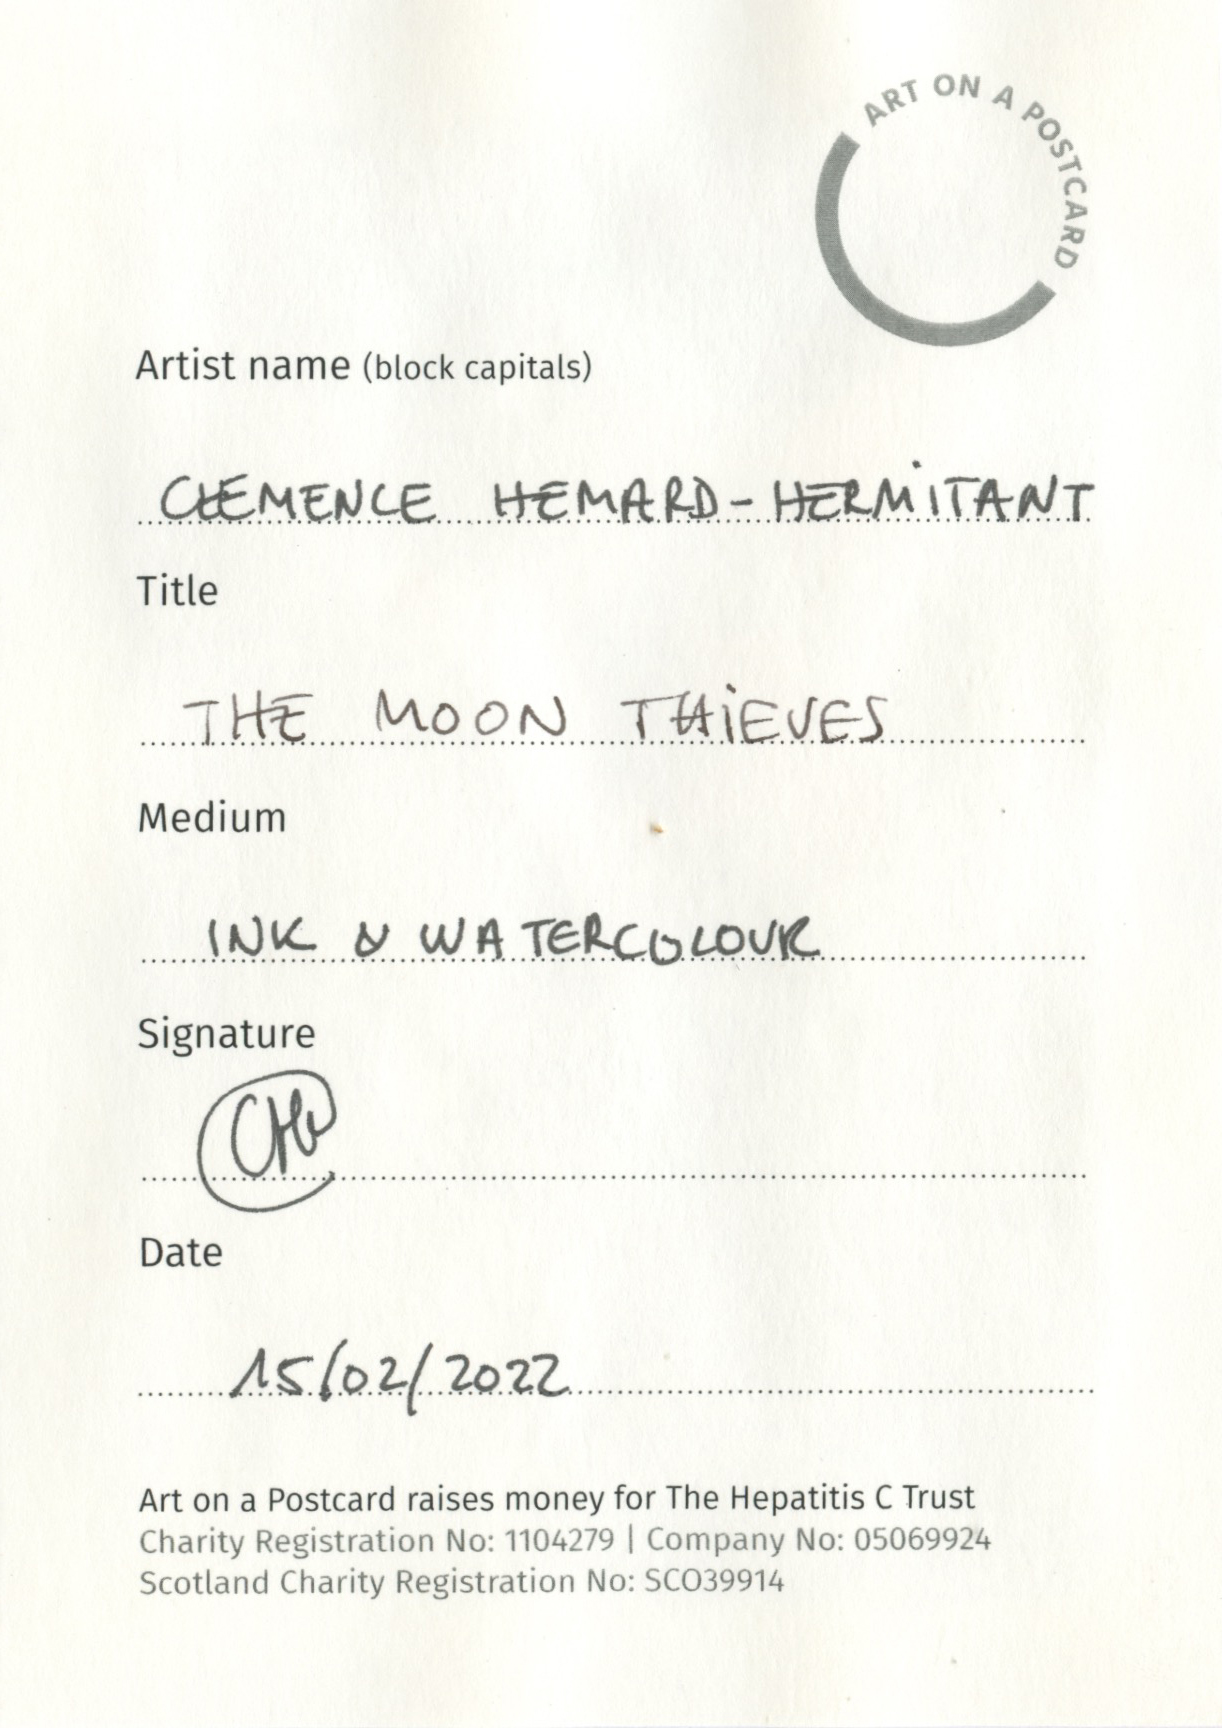 51. Clemence Hemard-Hermitant - The Moon Thieves